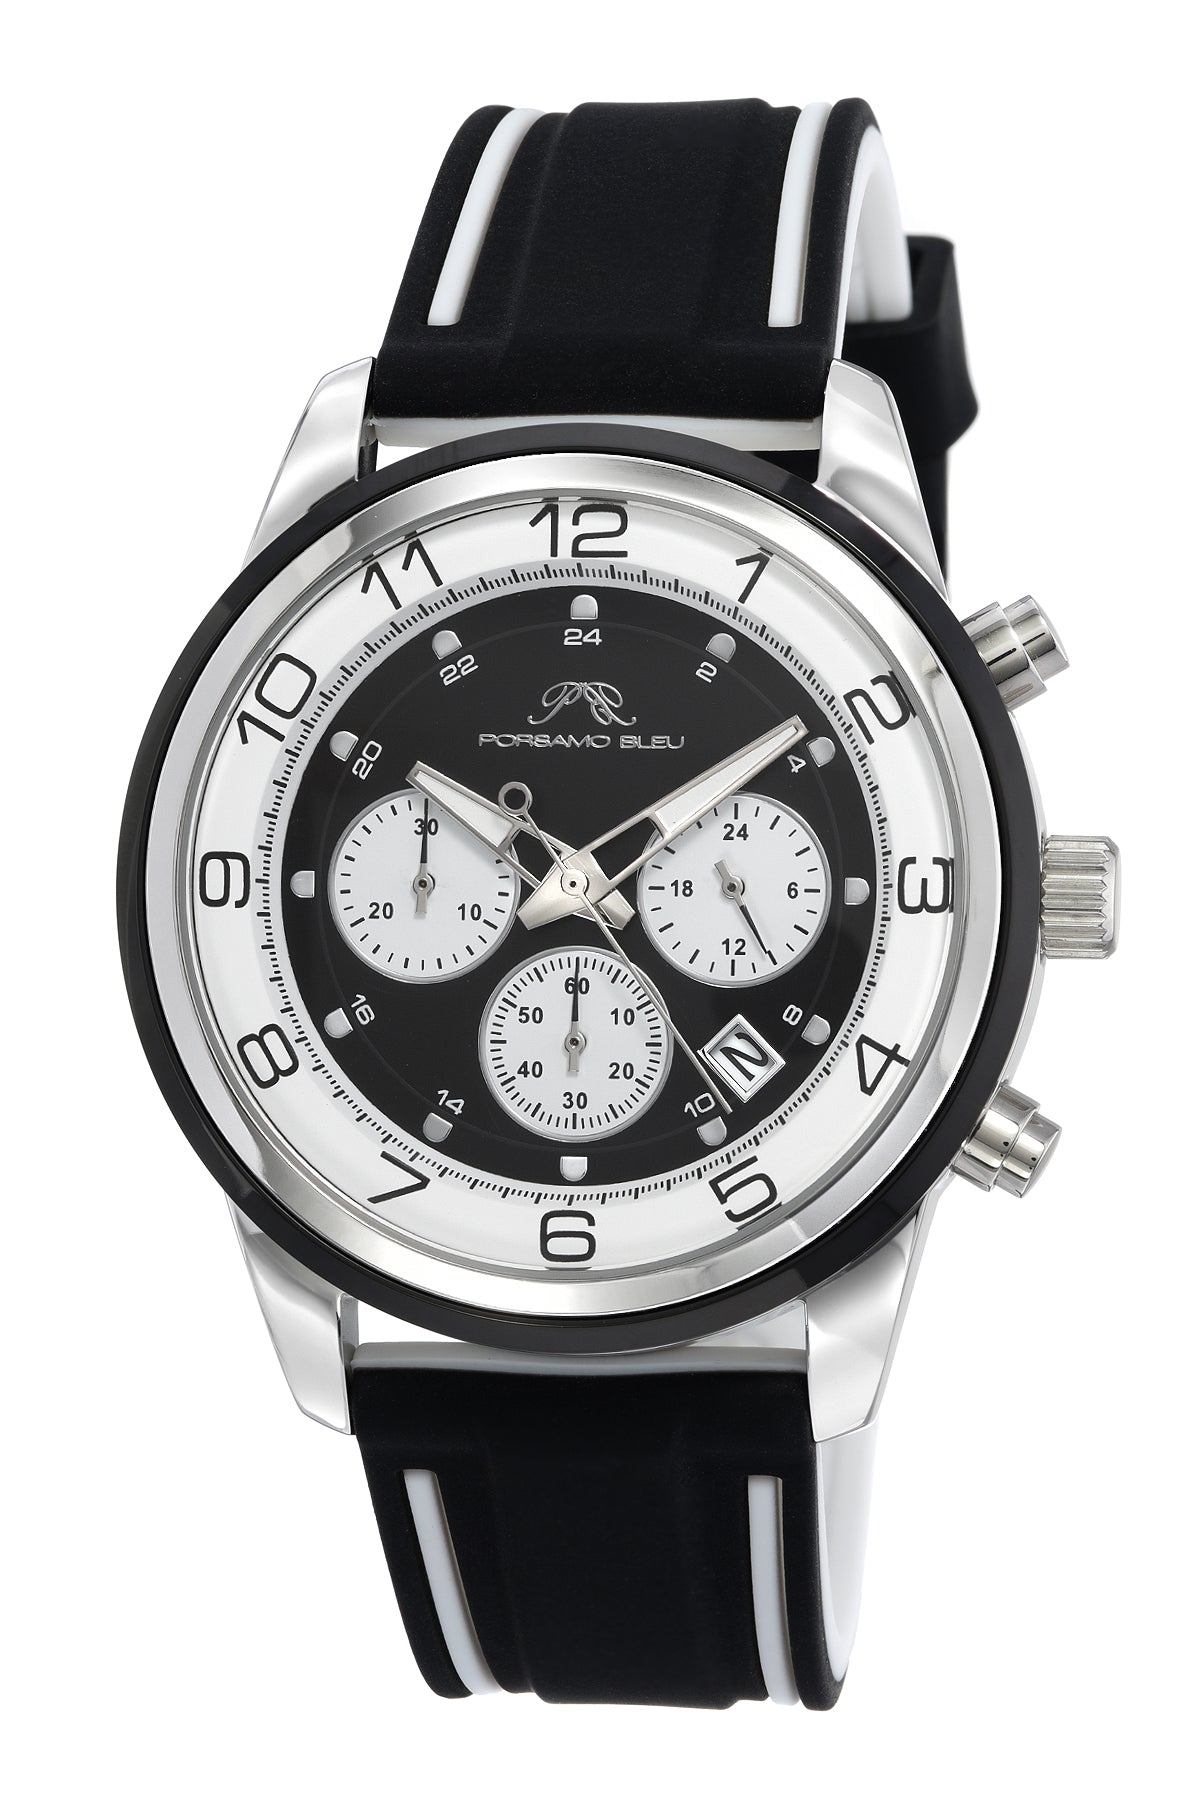 Porsamo Bleu Arthur Luxury Chronograph Men's Silicone Strap Watch, Silver, Black, White 1092BARR